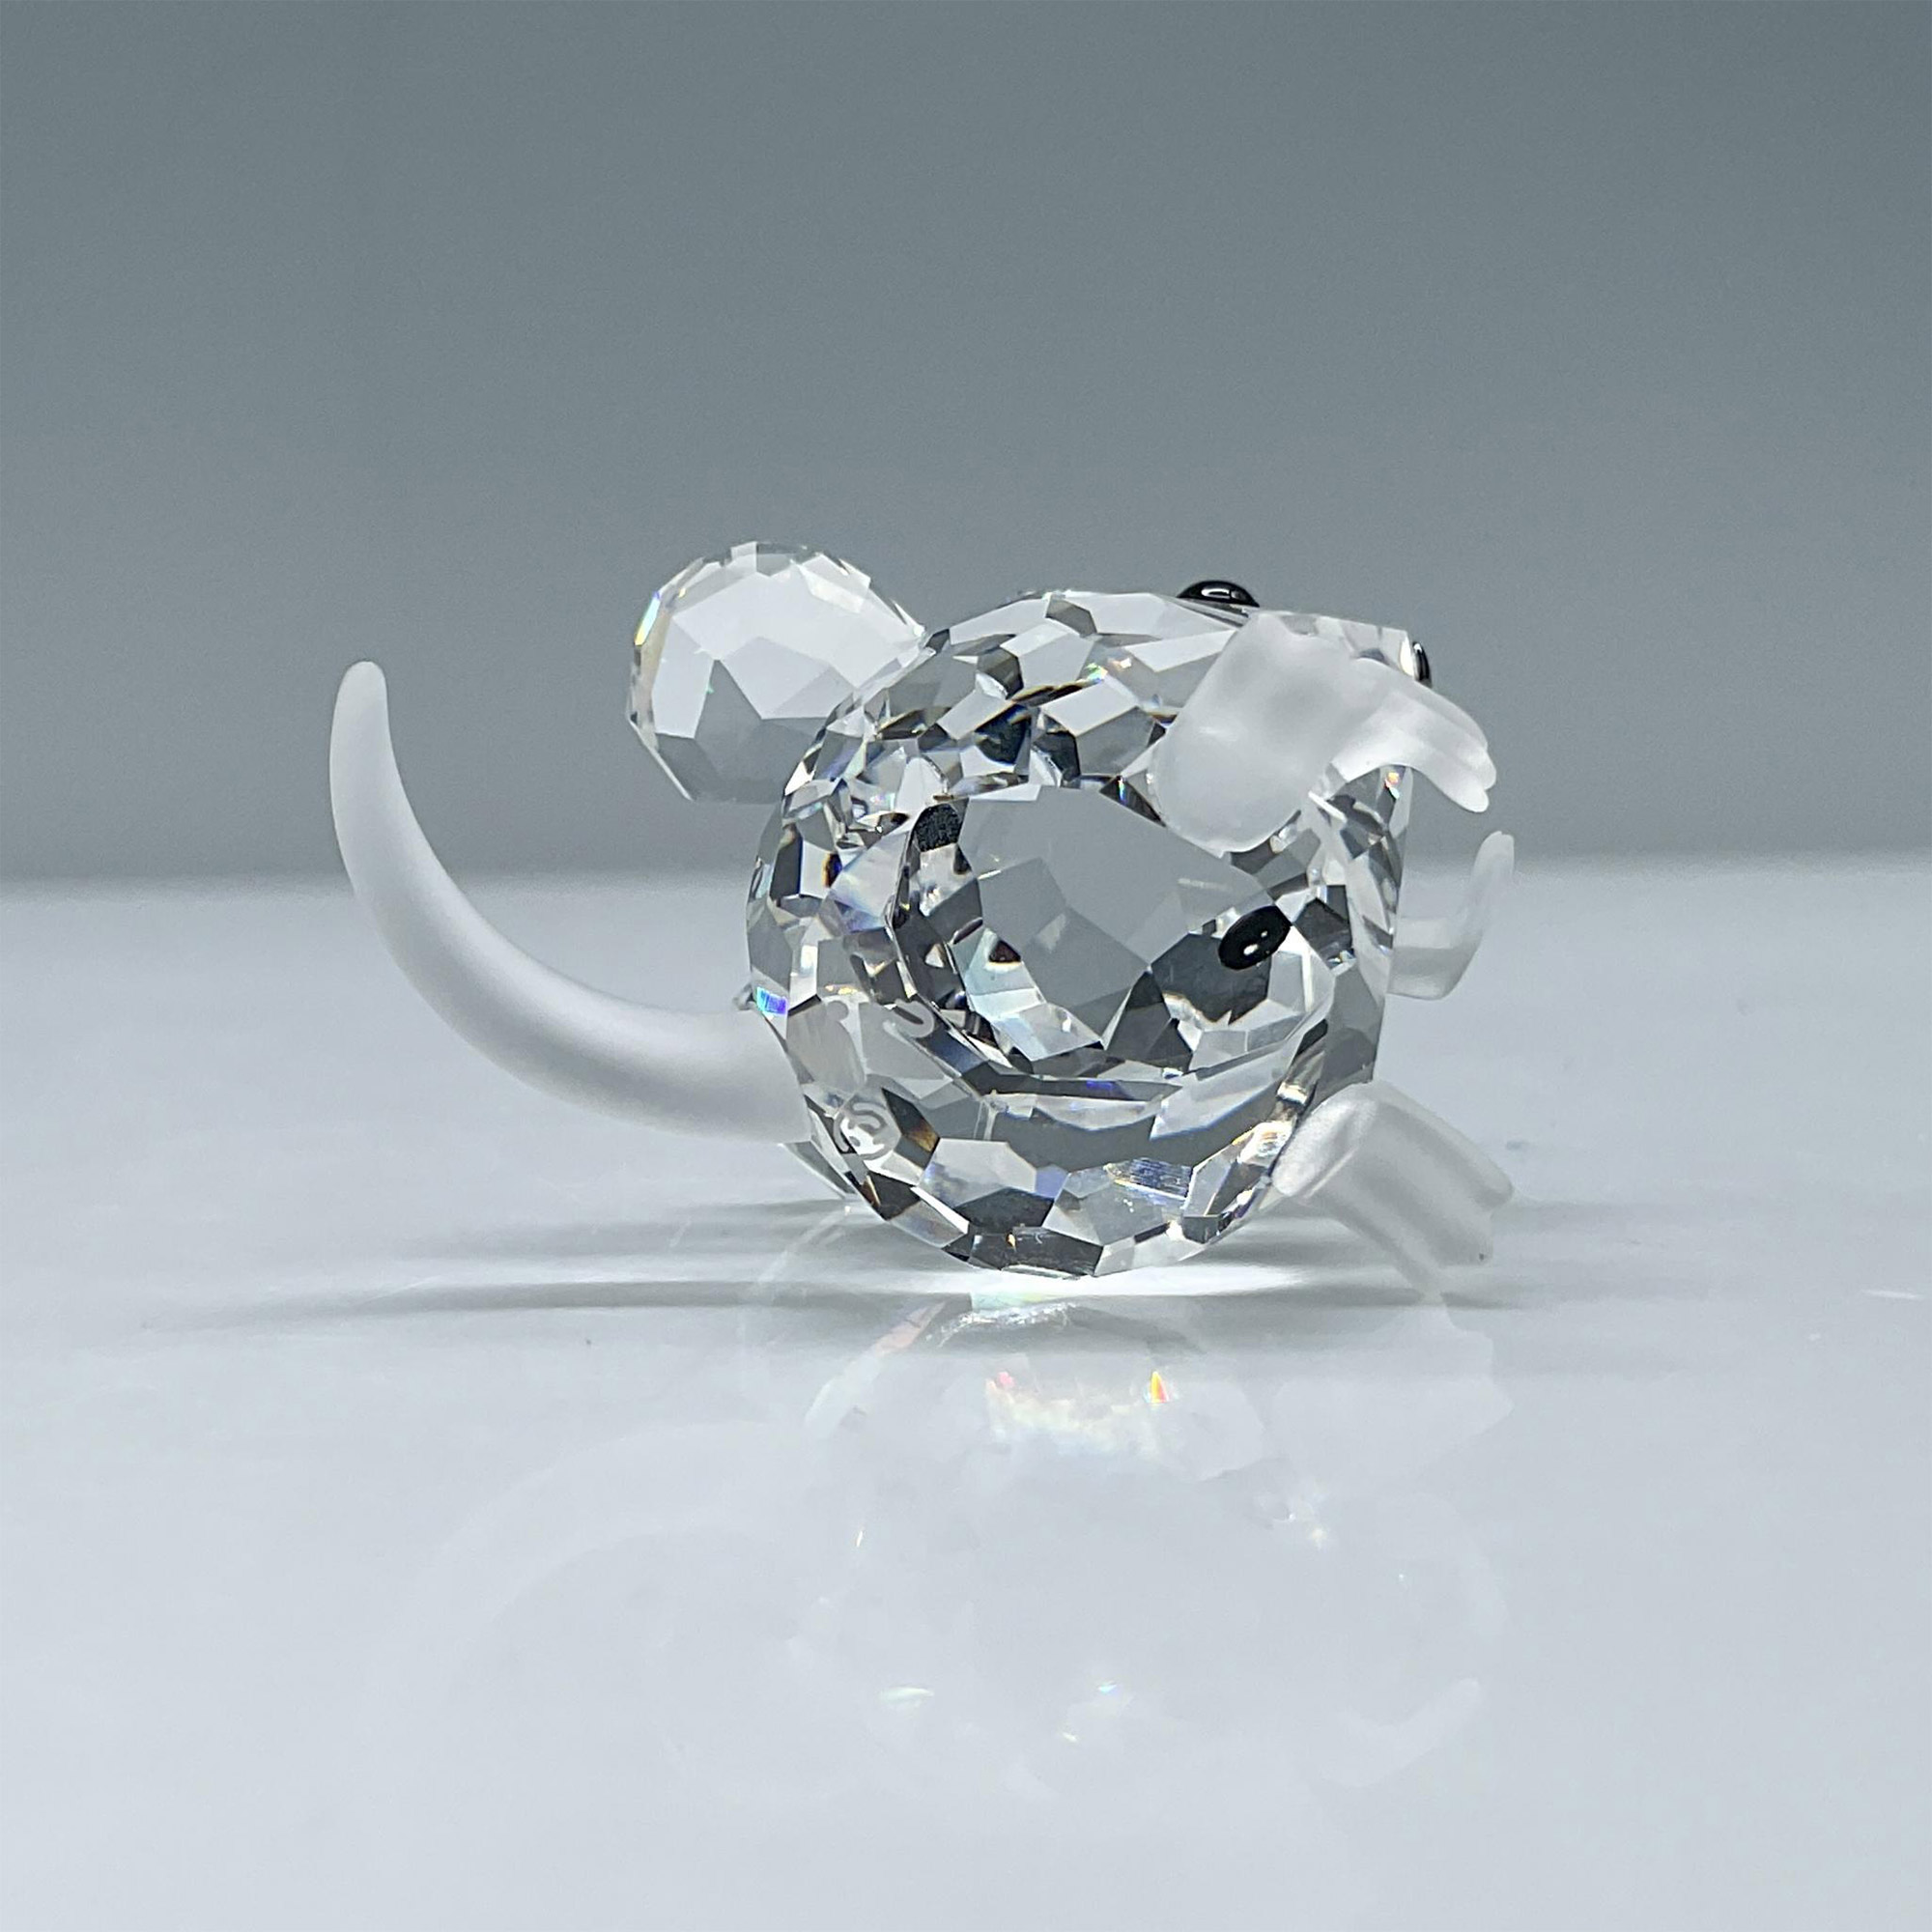 Swarovski Crystal Figurine, Field Mouse 162886 - Image 3 of 4